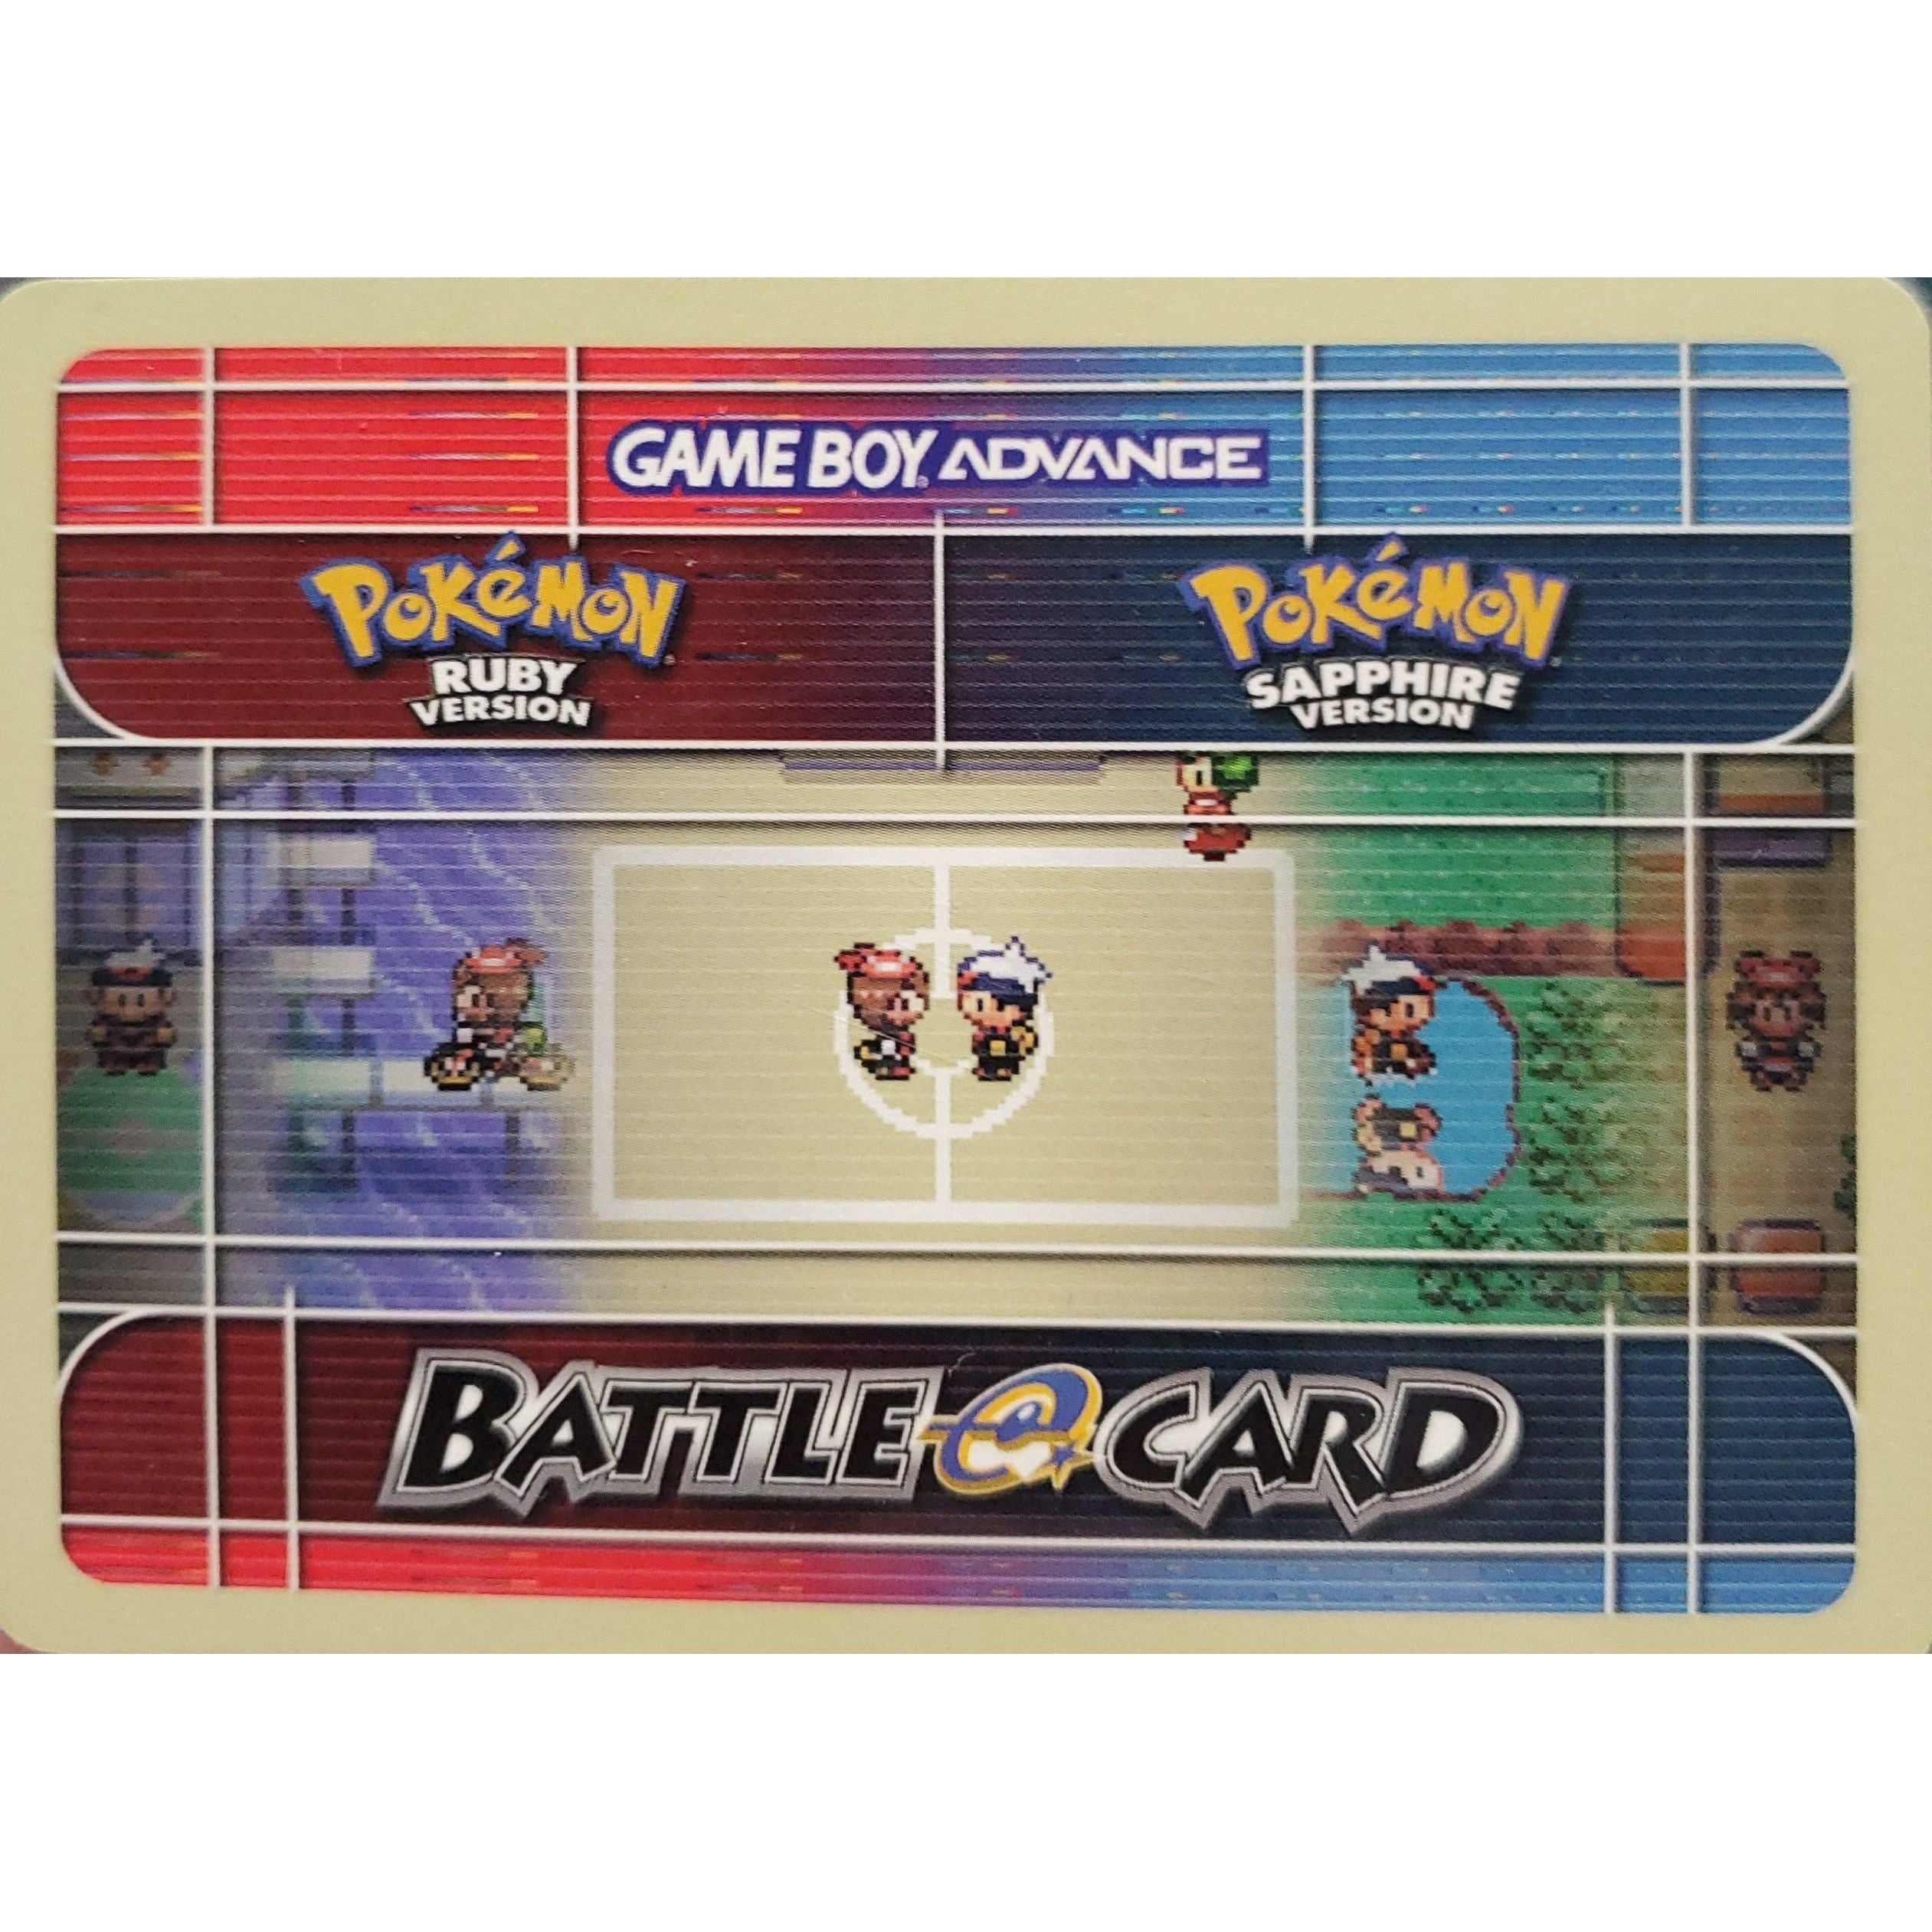 GBA - Carte de combat Pokémon - Cool Trainer Belford